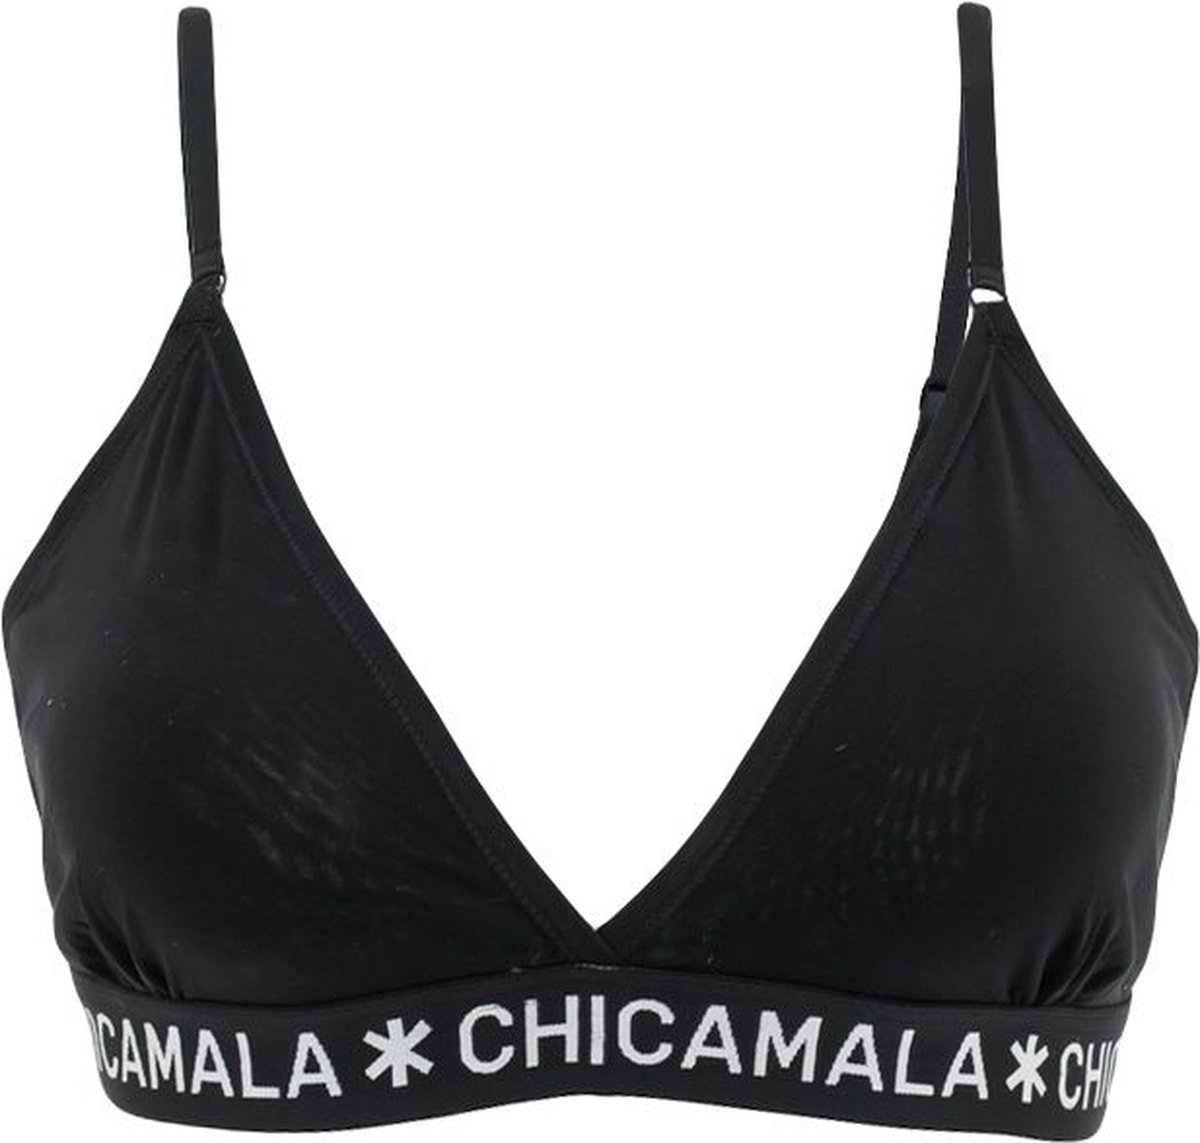 Chicamala dames triangle bralette basic zwart - S